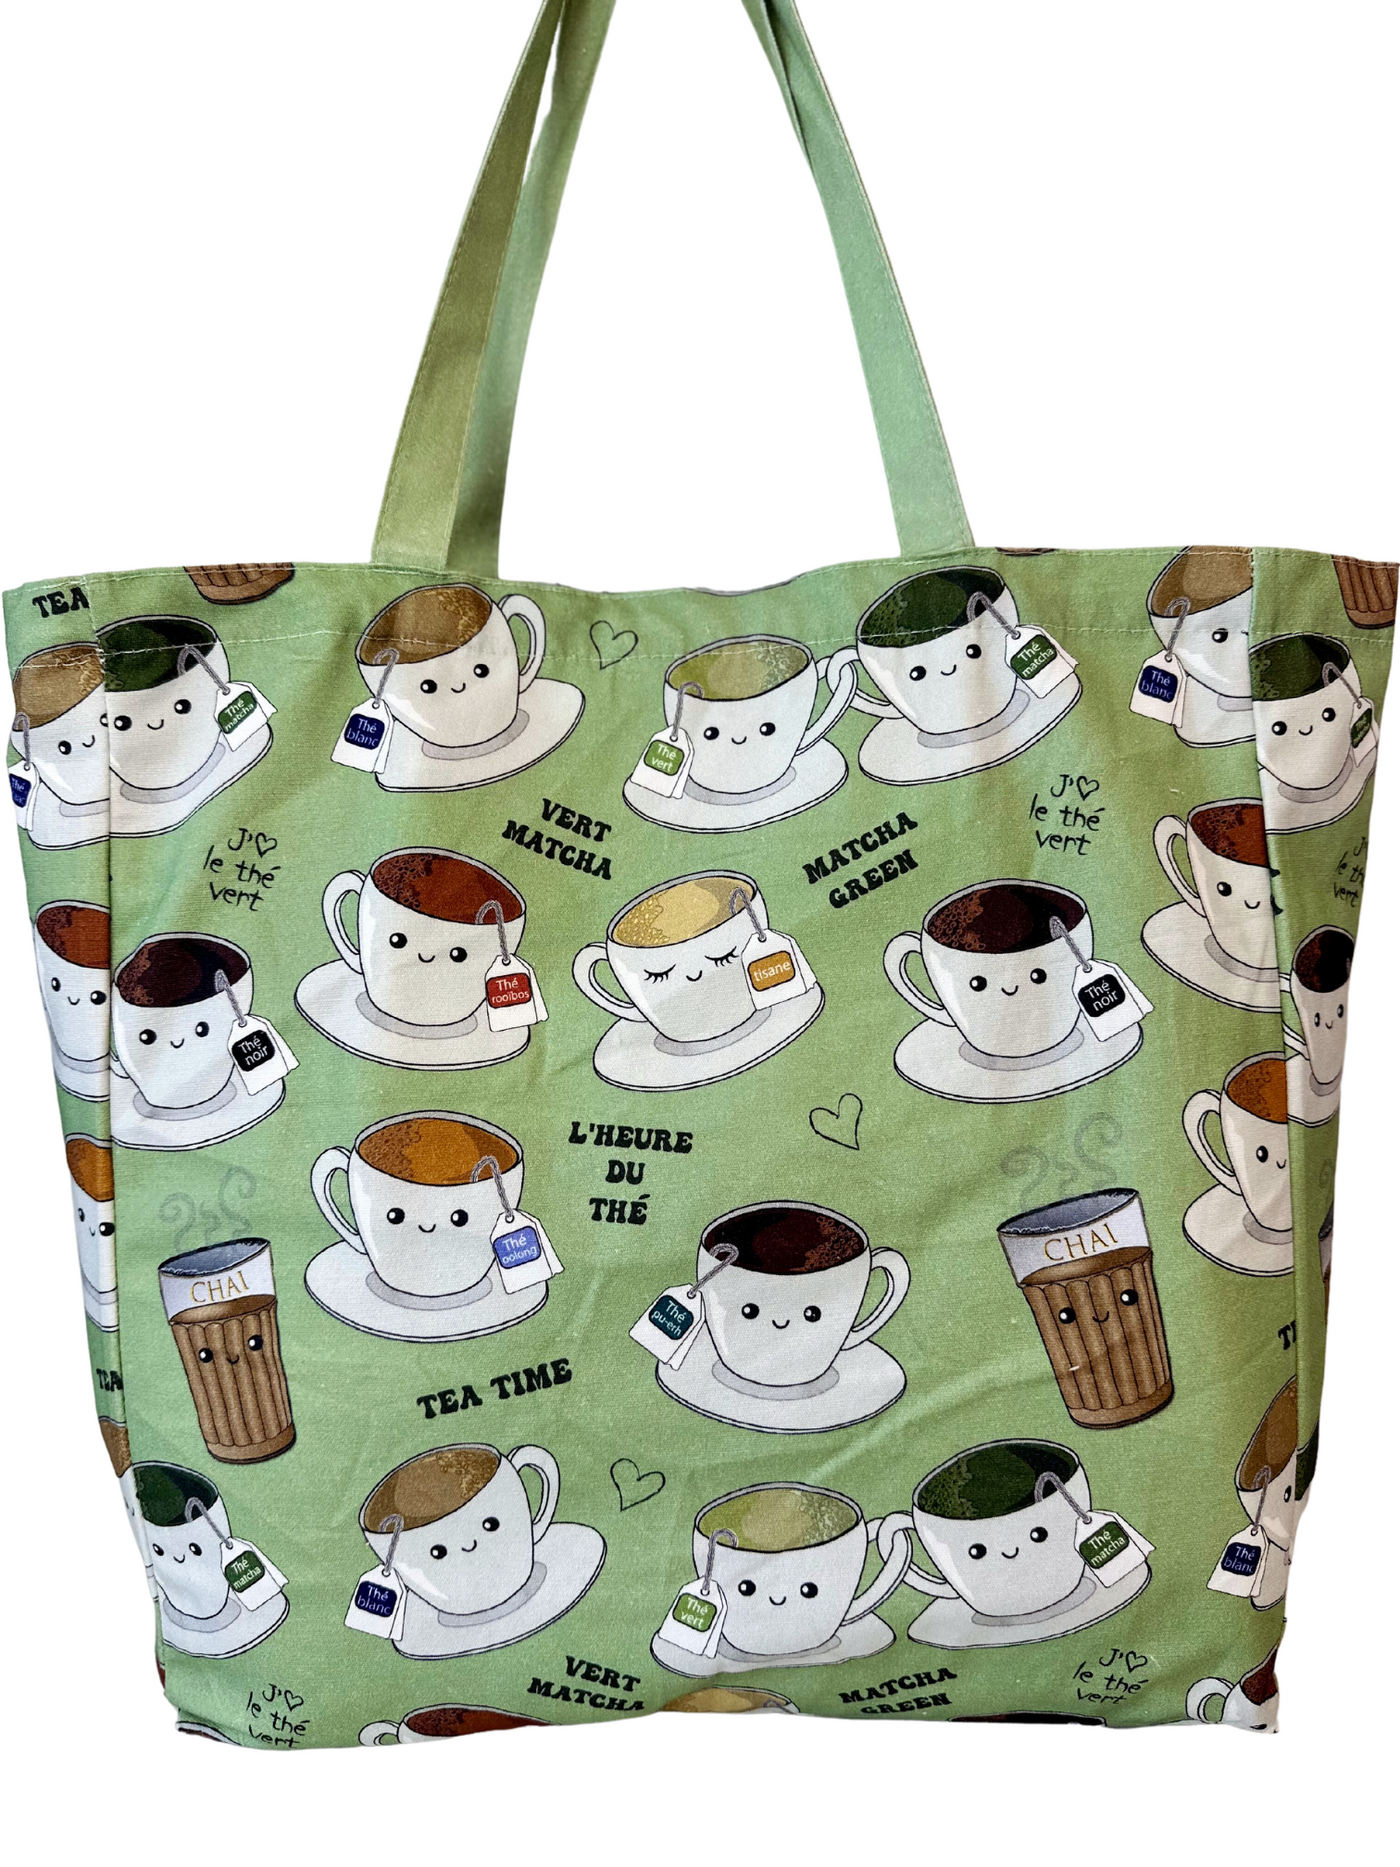 Illustrated Tote Bag: Tea Time